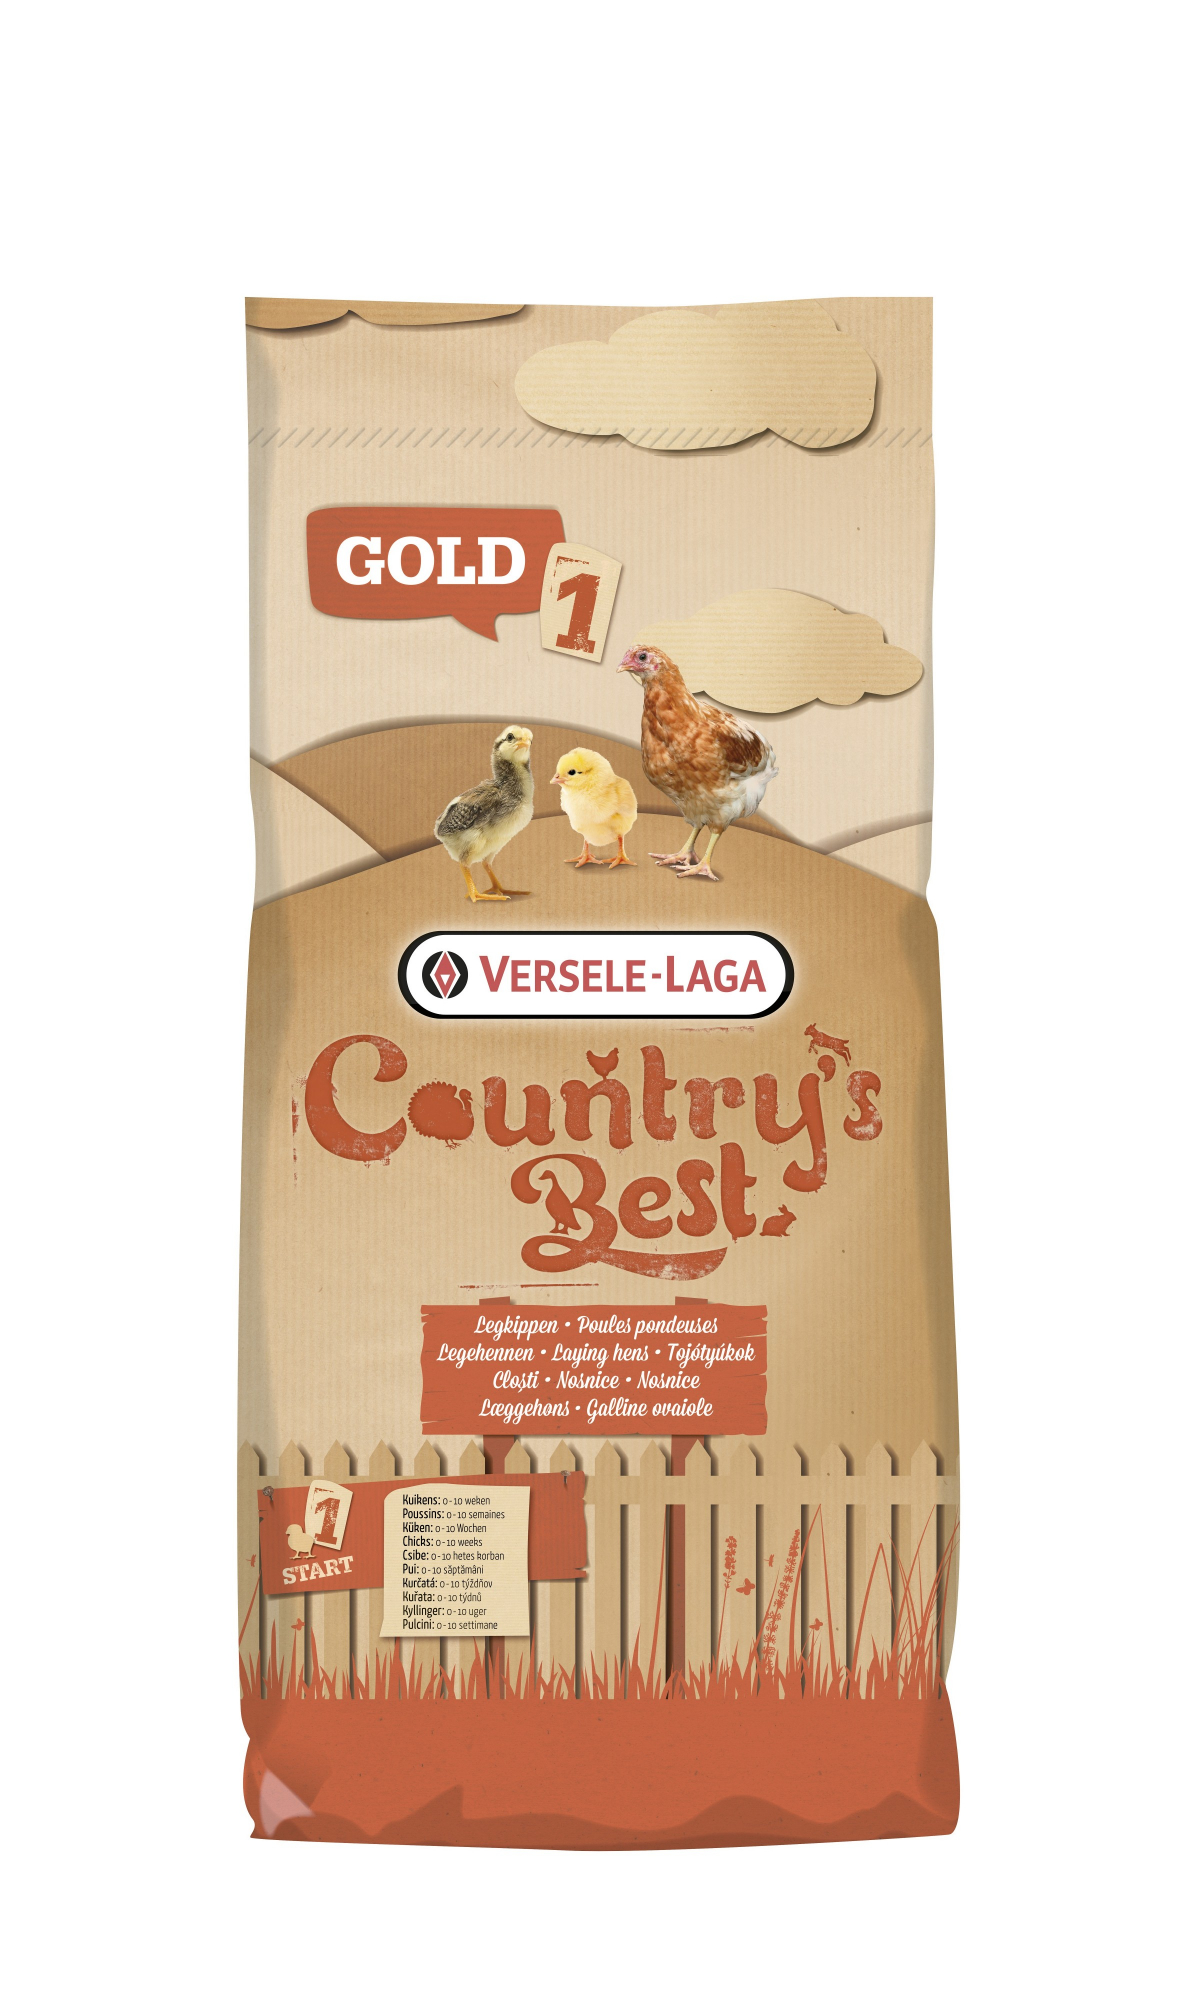 Gold 1 Crumble Country's bestes Ausgangsfutter für Hühner